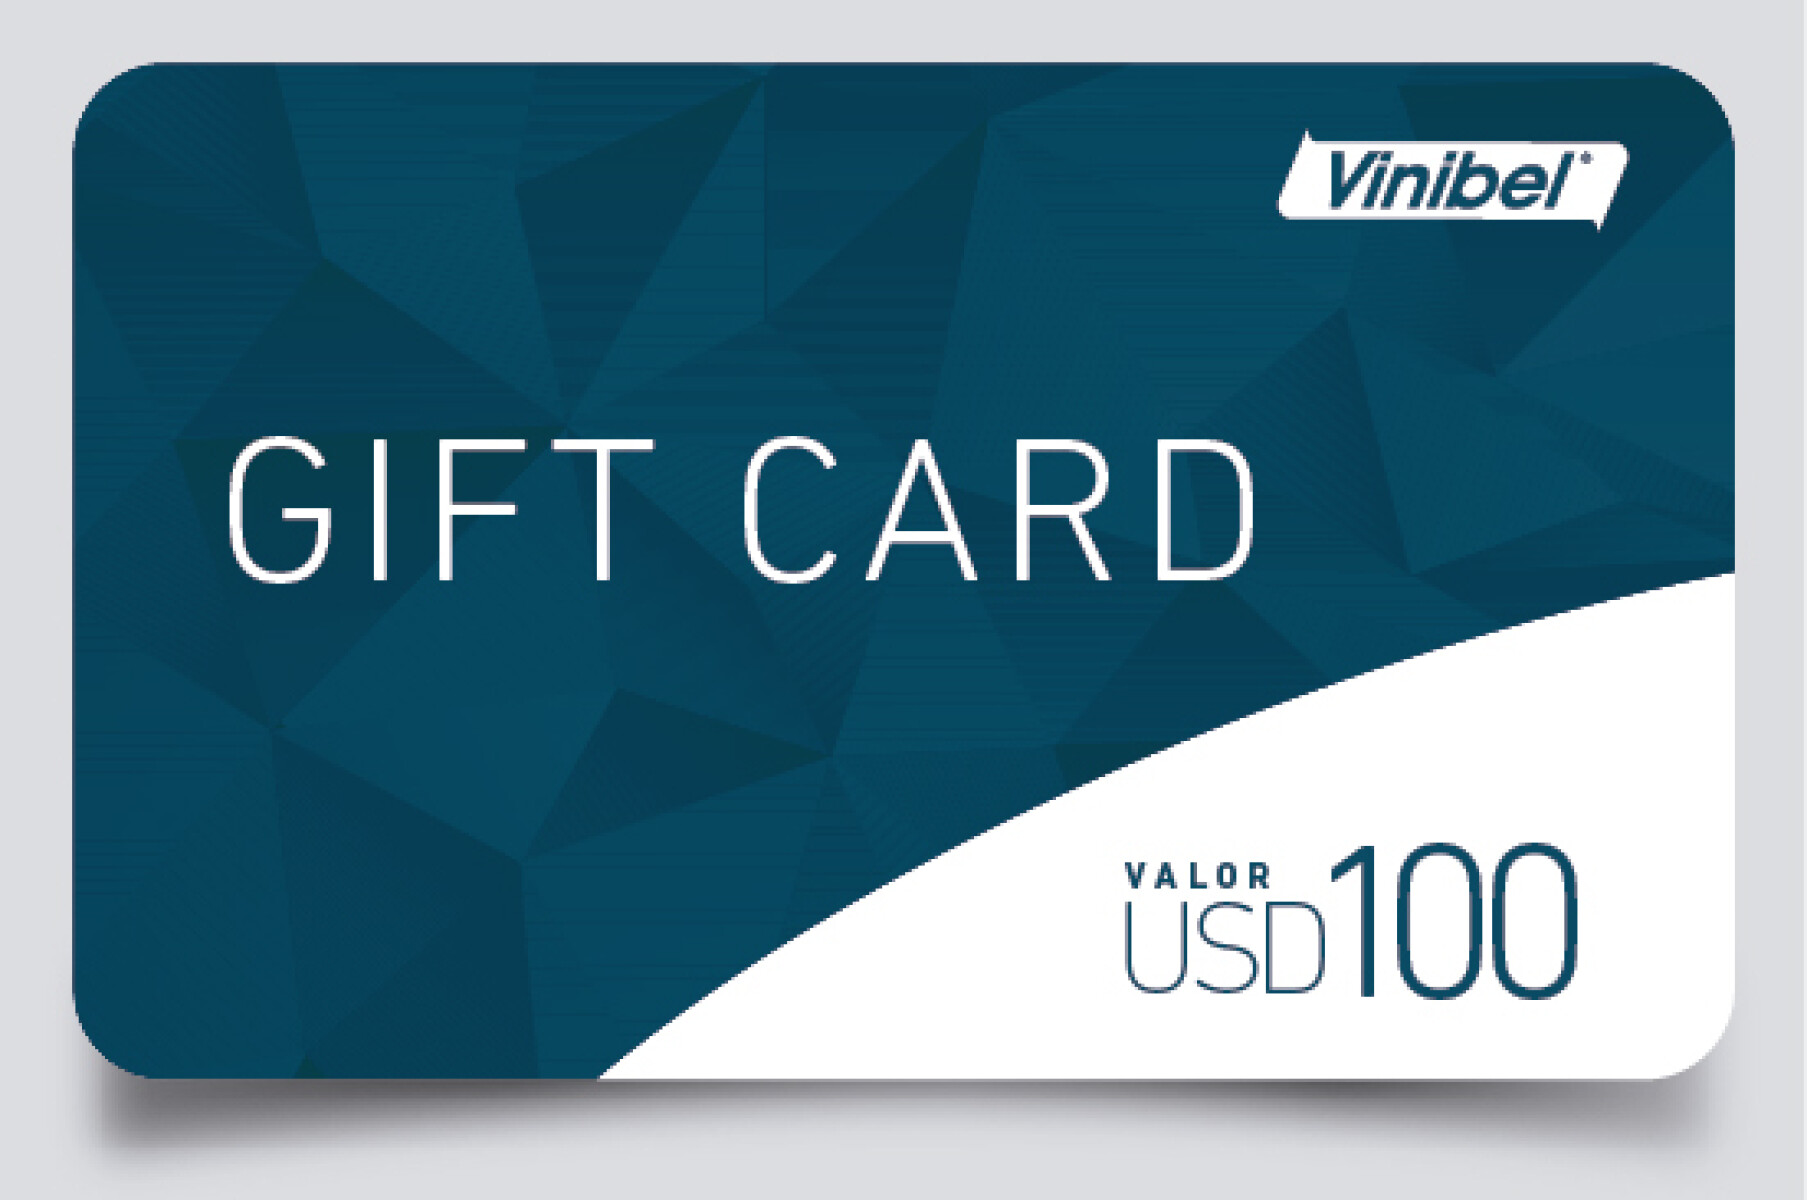 GIFT CARD VINIBEL - TARJETA GIFT CARD VINIBEL U$S 100 